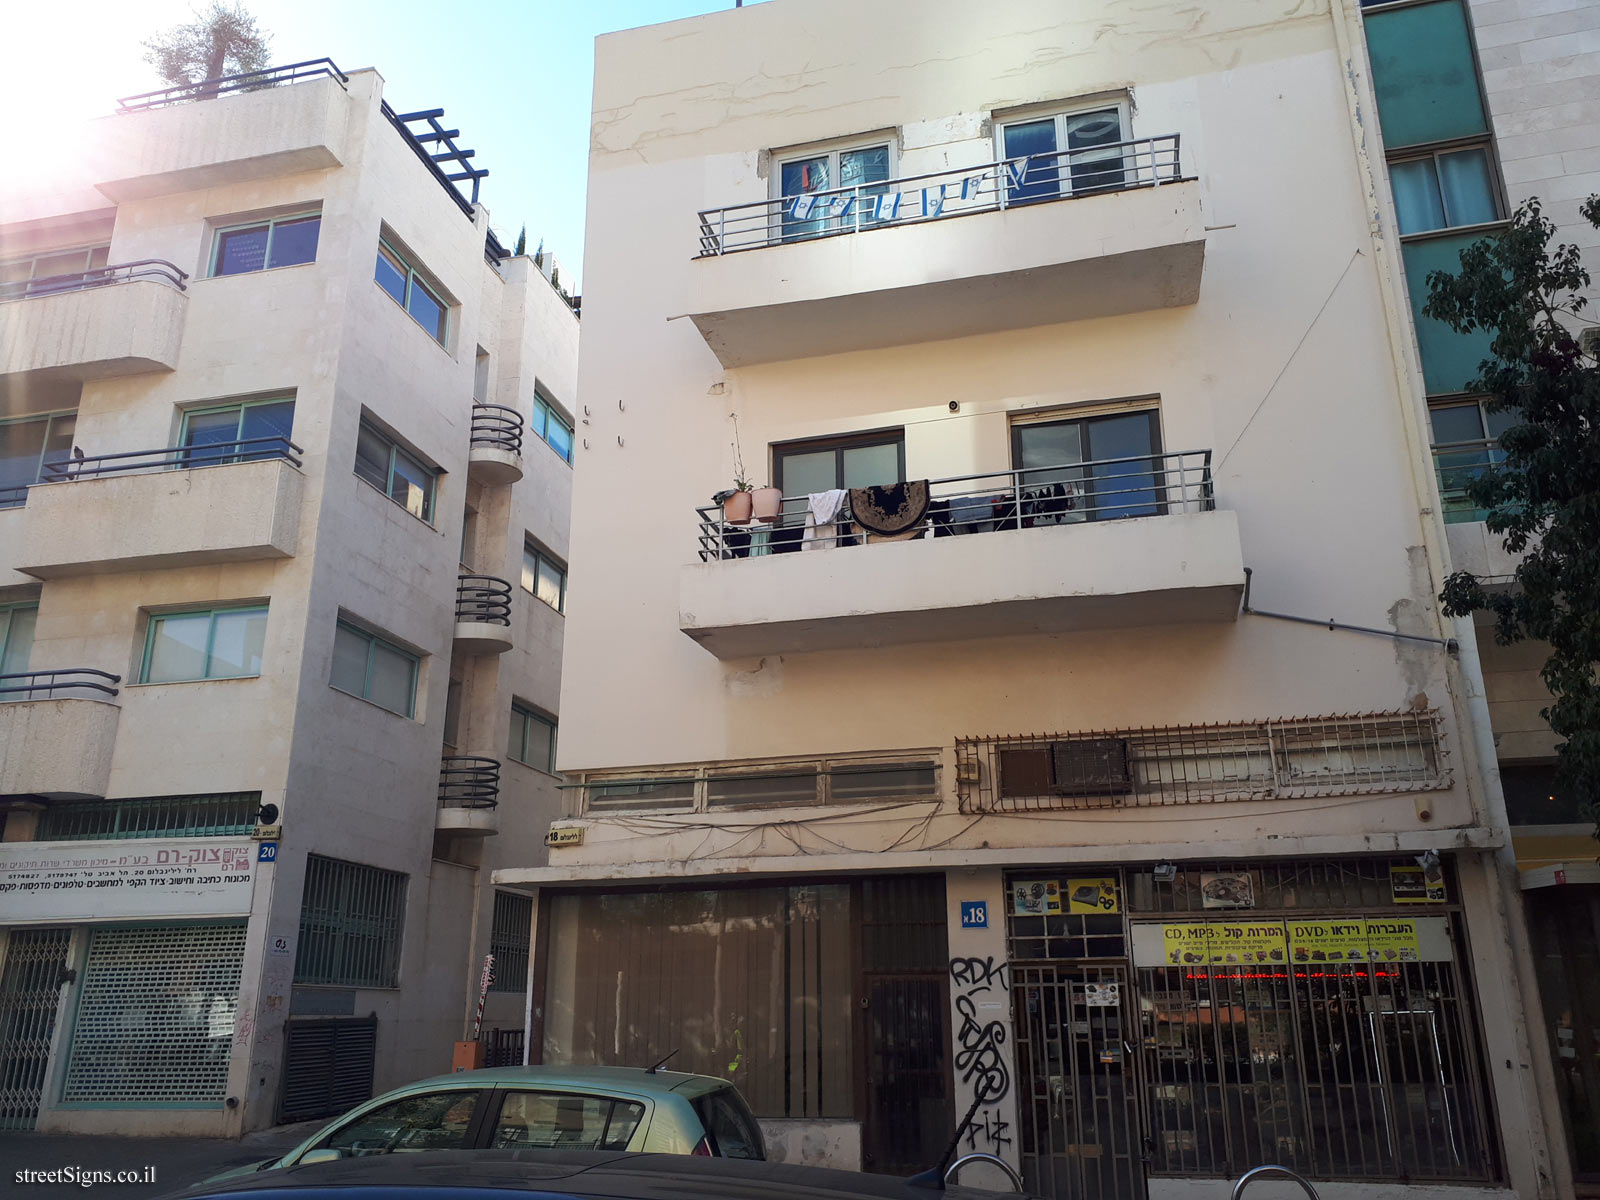 Israel and Haya Weinstein - The houses of the founders of Tel Aviv - Lilienblum St 18, Tel Aviv-Yafo, Israel